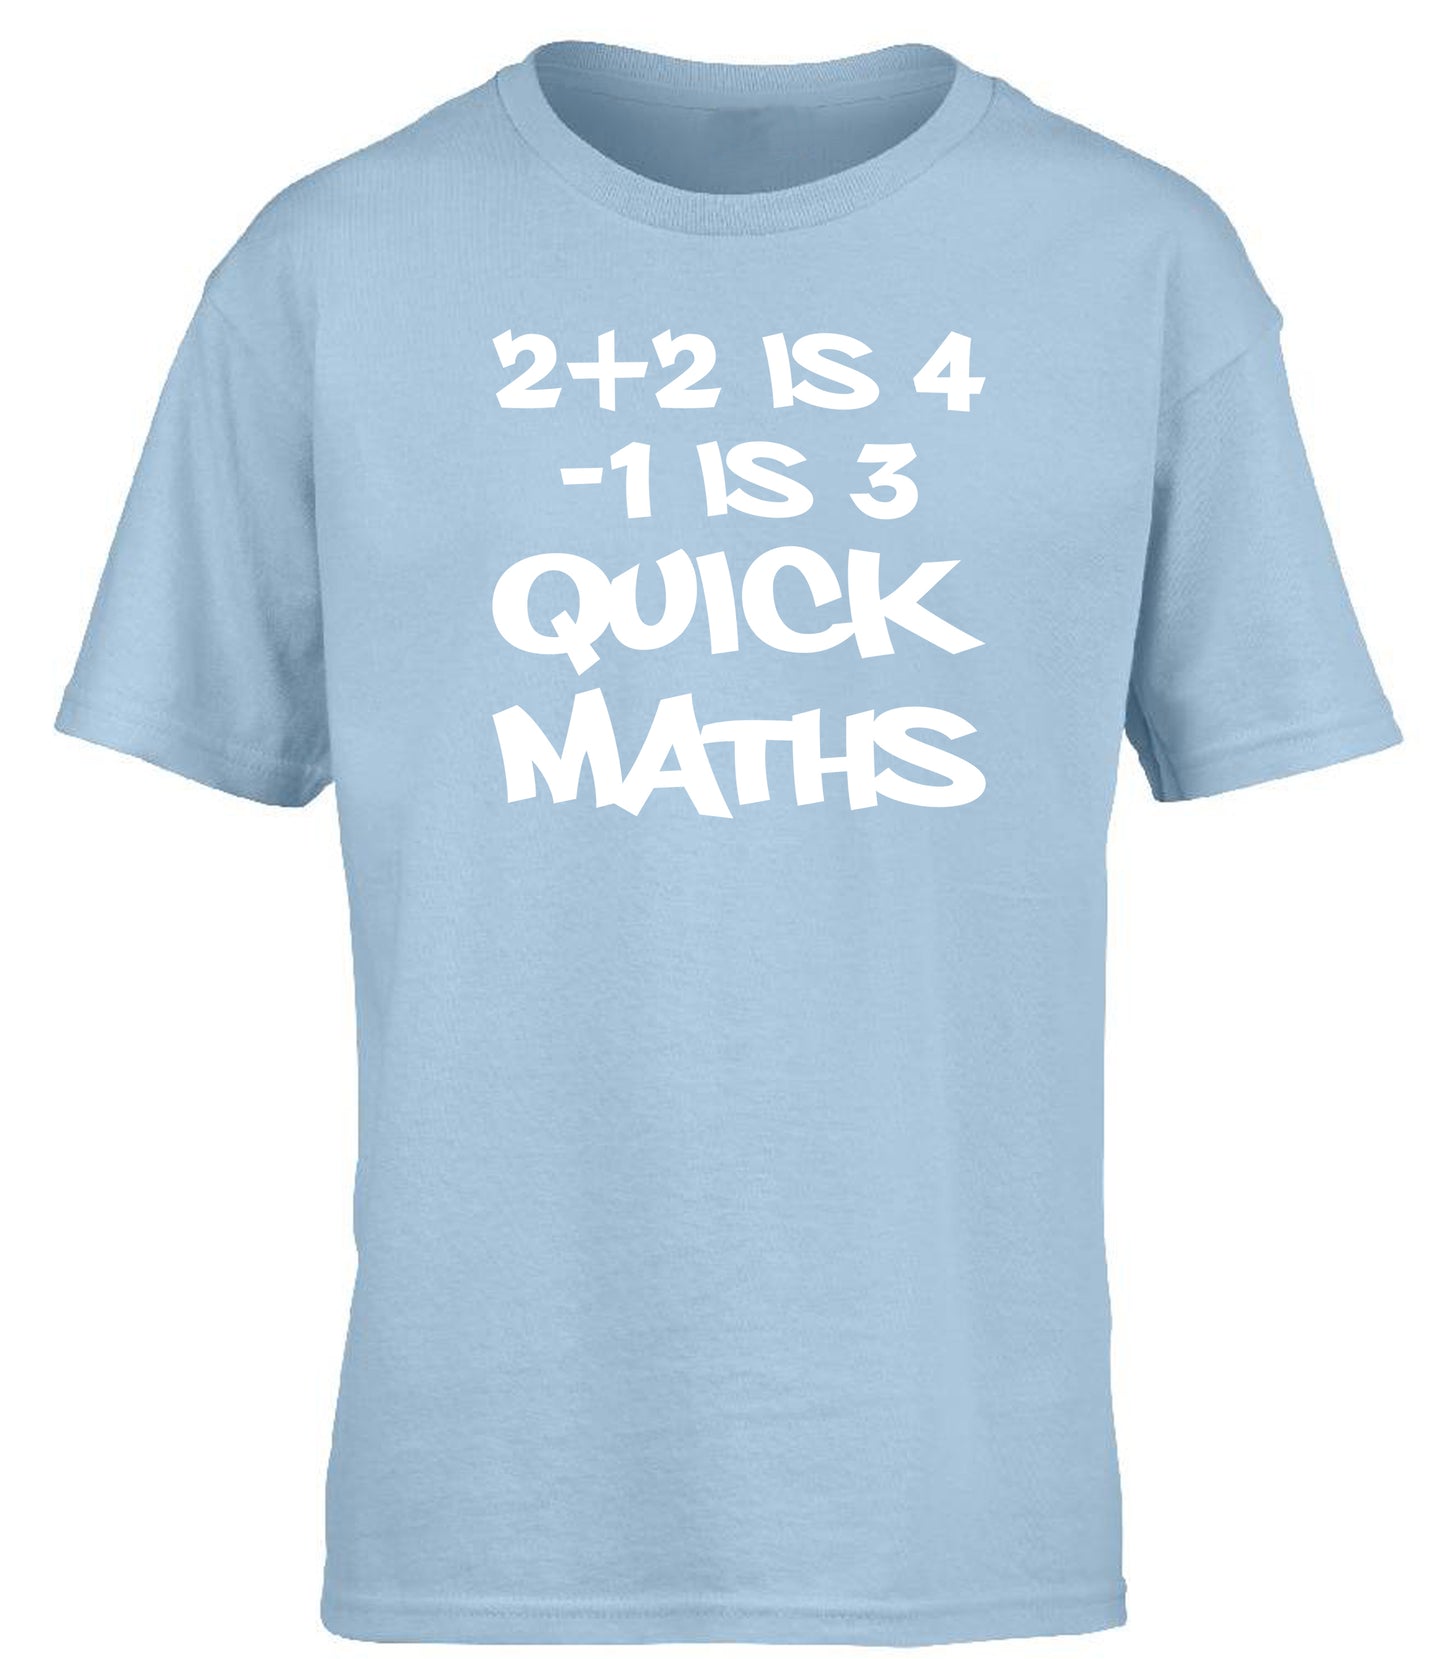 2+2 is 4-1 is 3 Quick Maths Viral Grime children's T-shirt